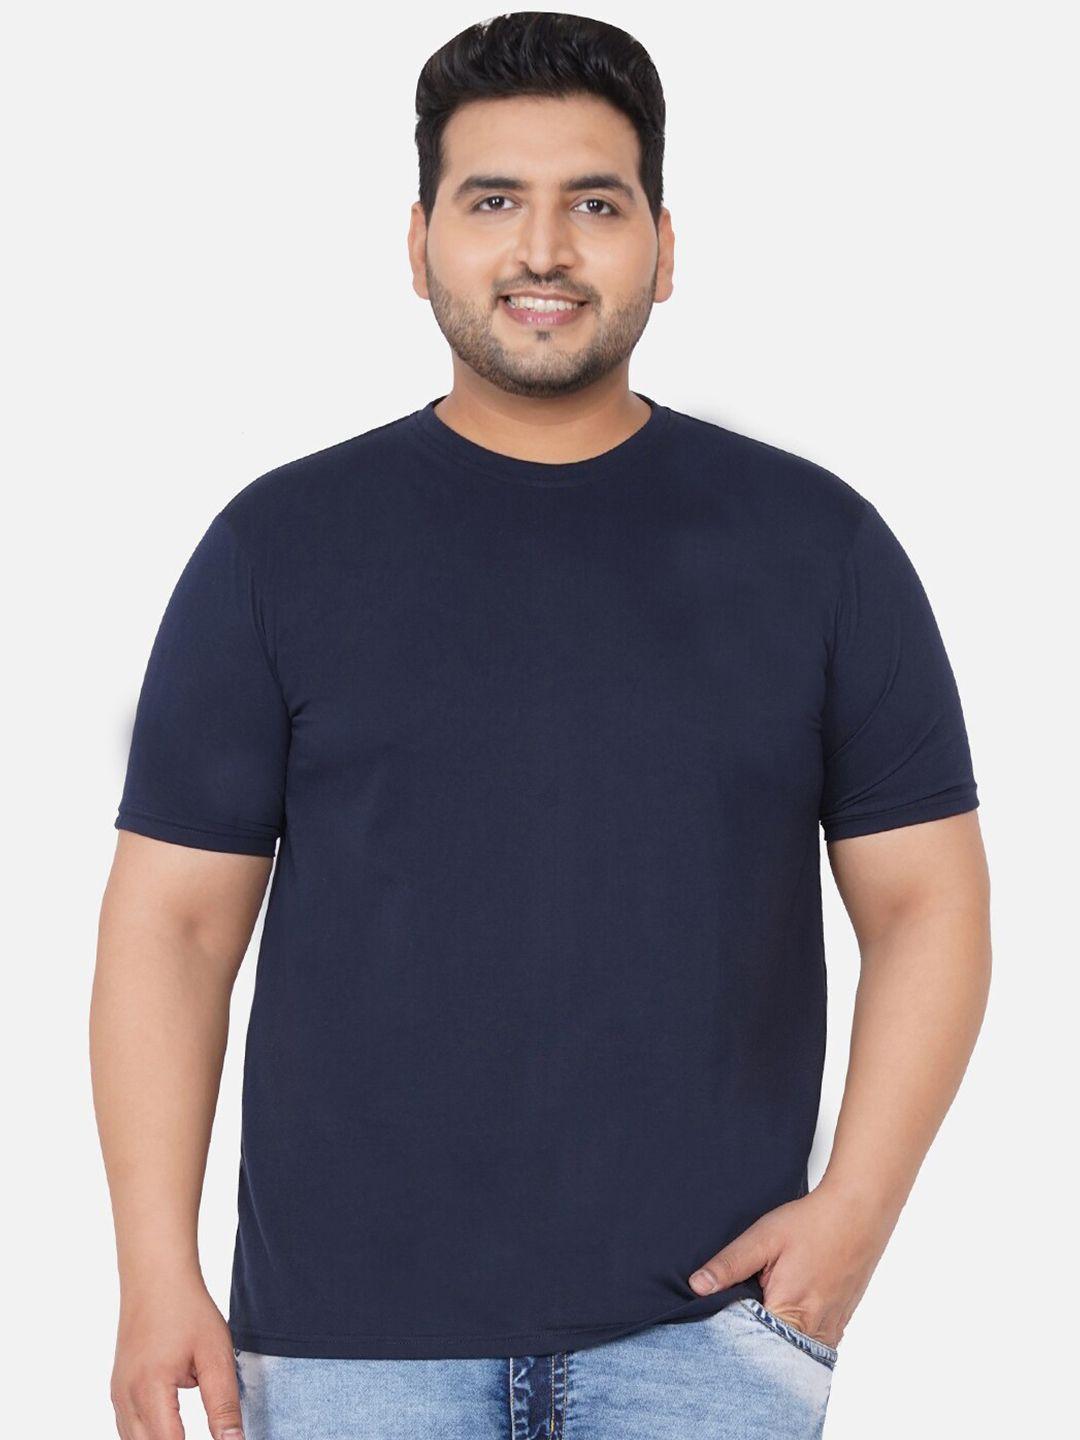 john pride men plus size navy blue t-shirt